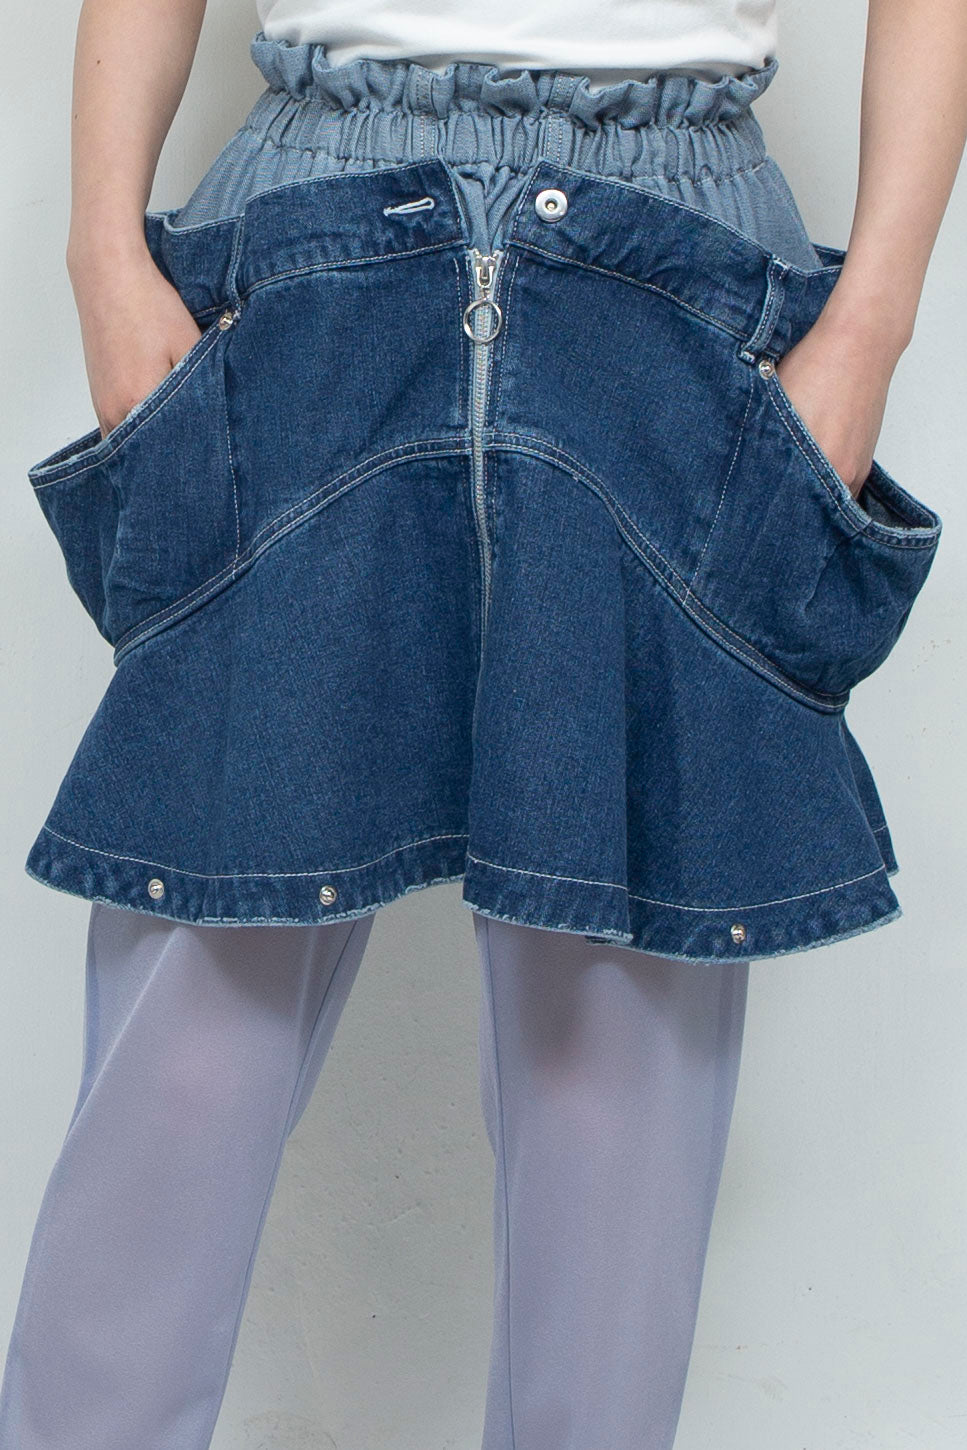 jean skirt tops blue